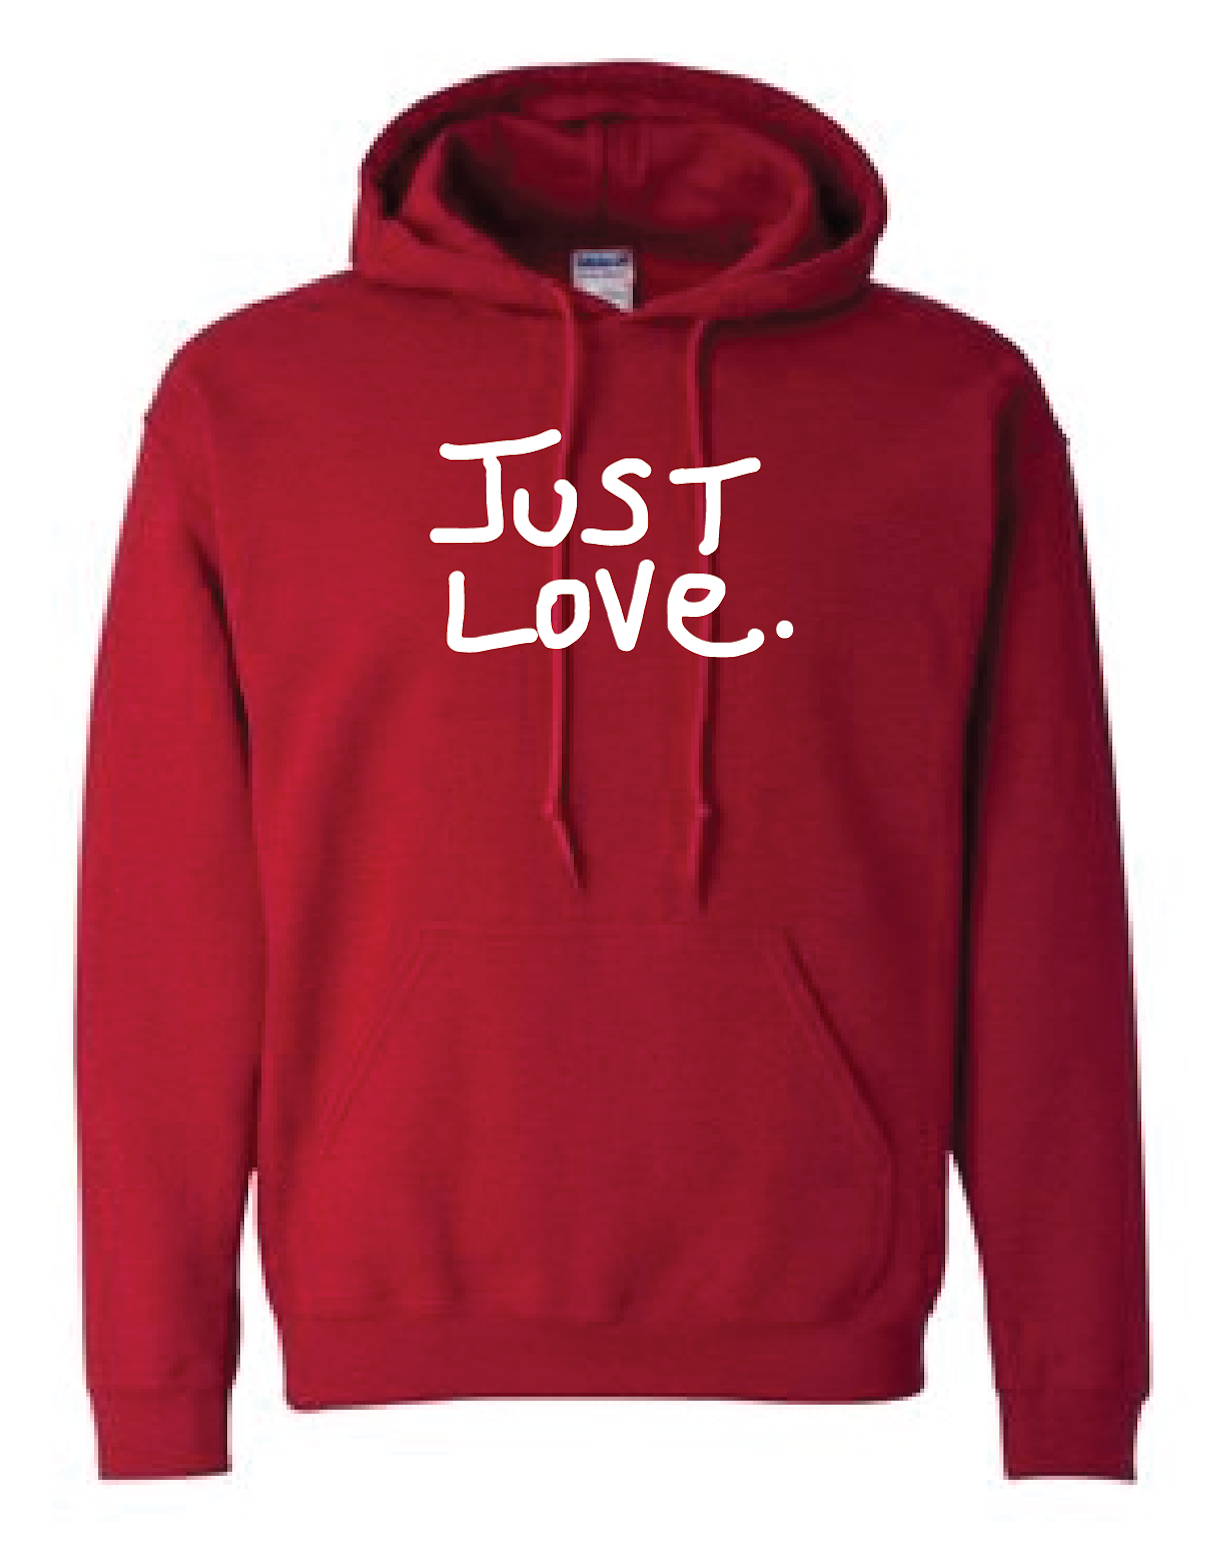 ANTIQUE CHERRY RED JUST LOVE hoodie sweatshirt – Julie's COOL Shirts